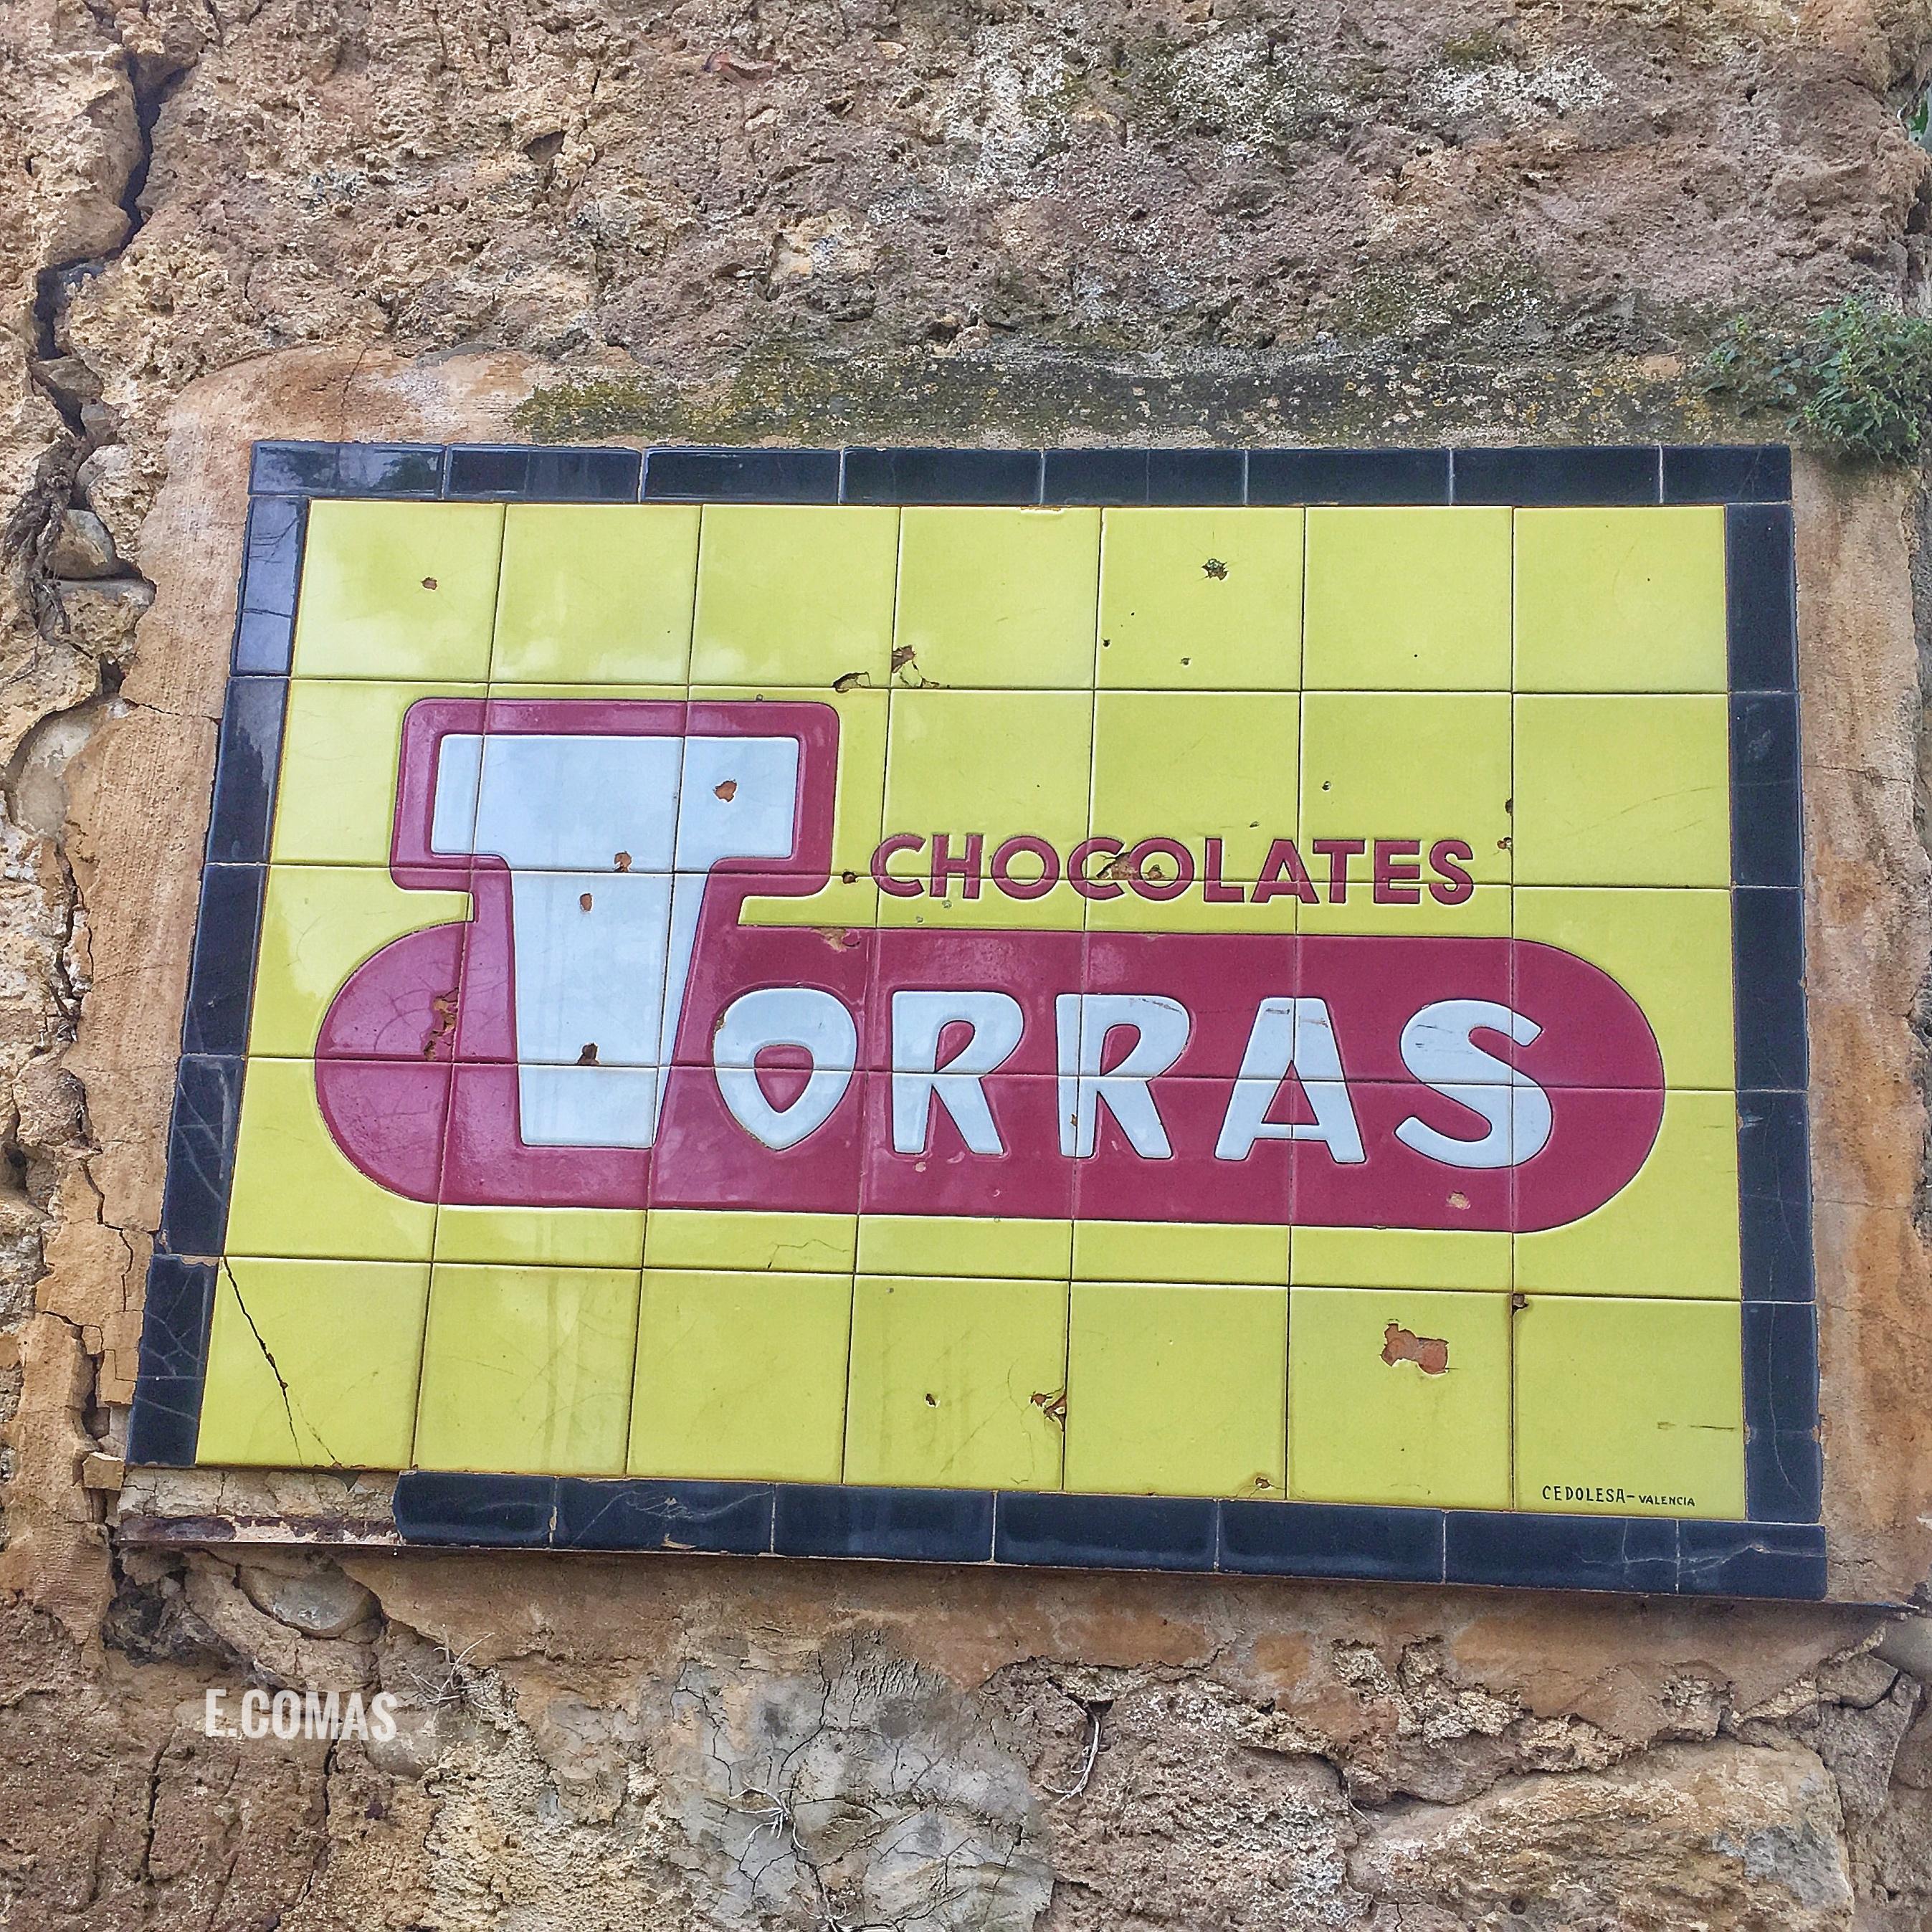 La campanya publicitària de Chocolates Torras>